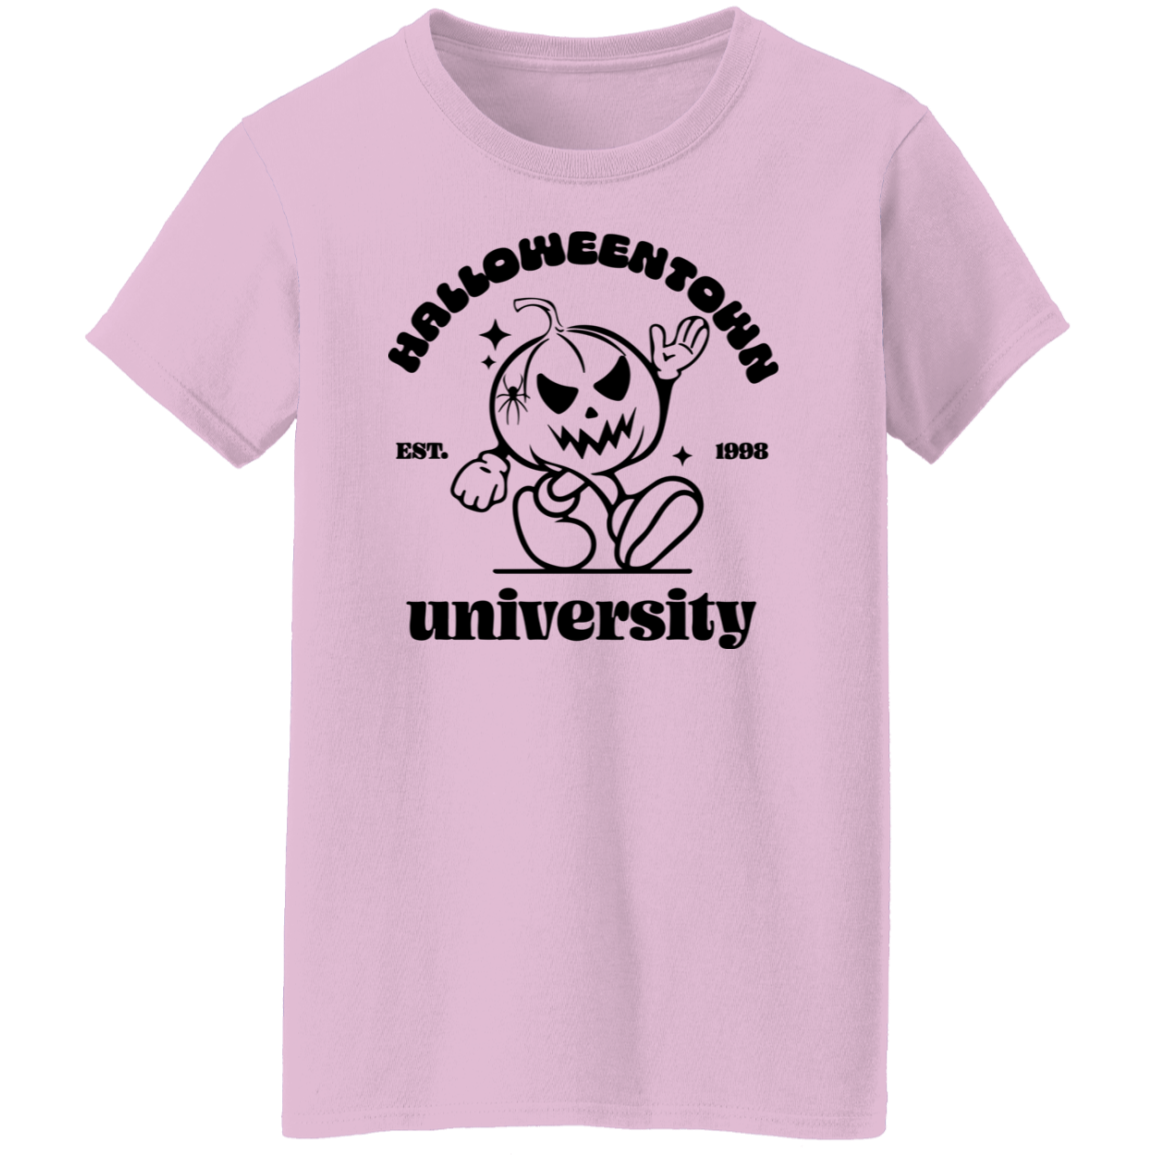 HalloweenTown University (Est. 1998) - Camiseta para mujer